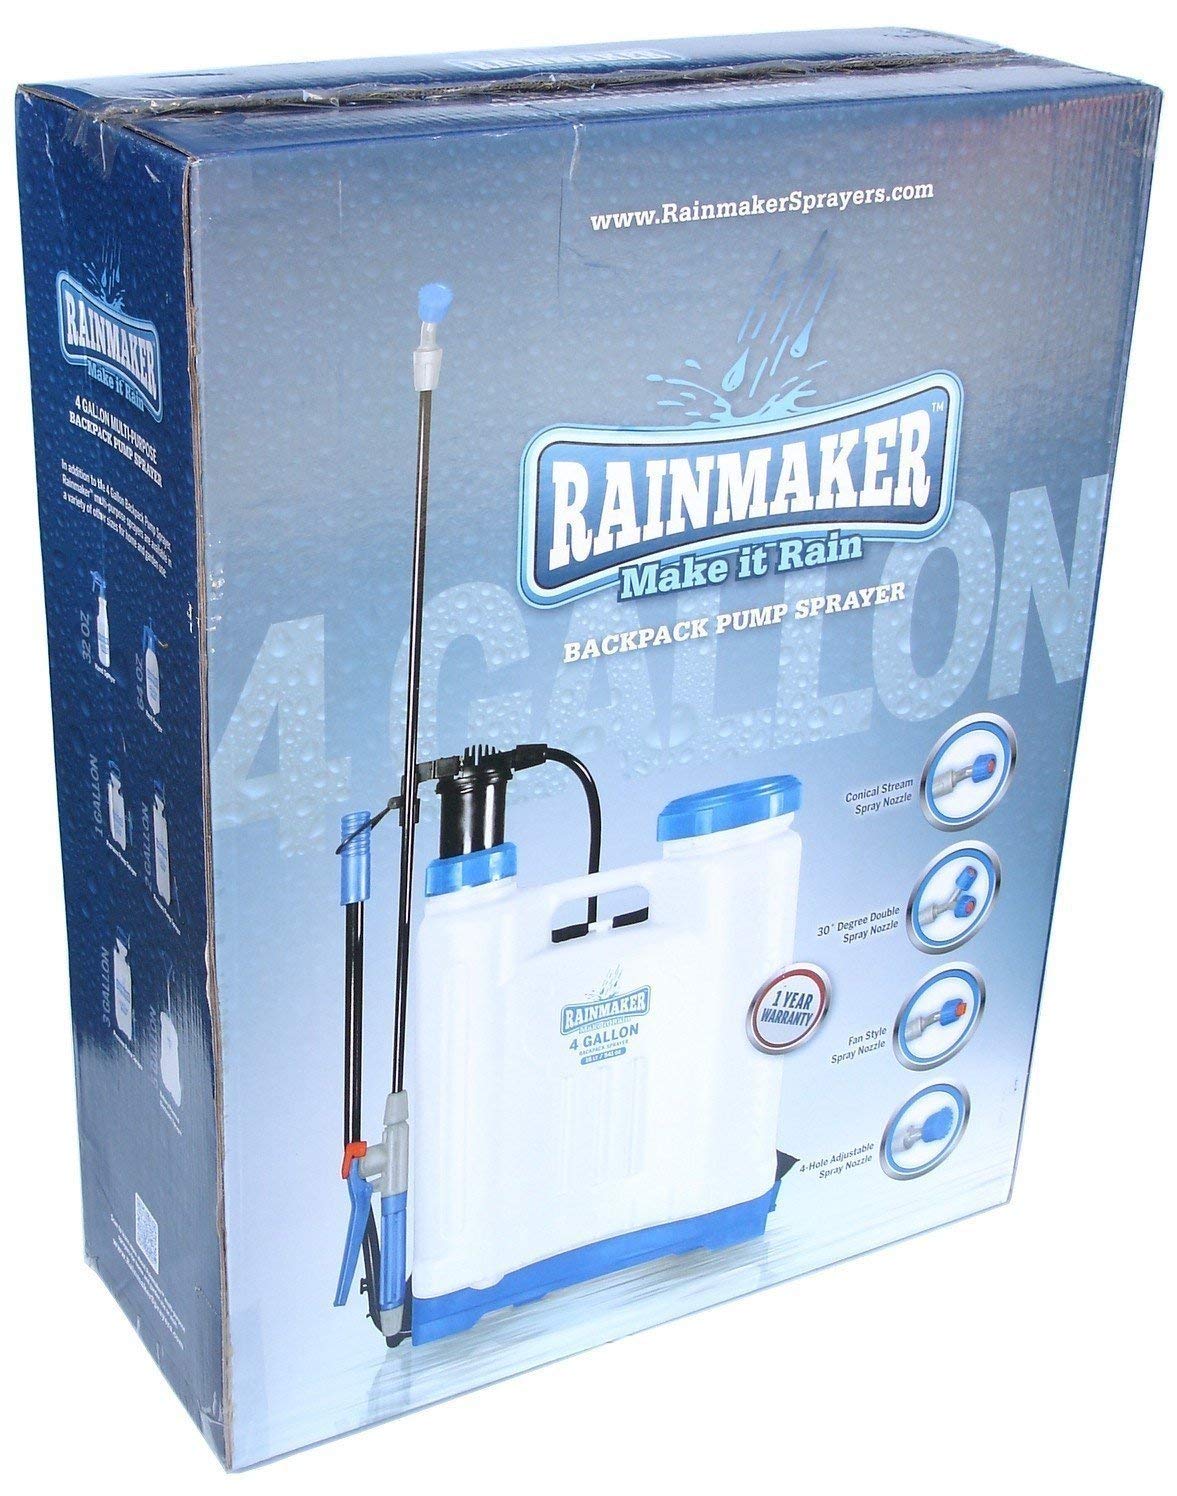 Rainmaker Backpack 4-Gallon Sprayer